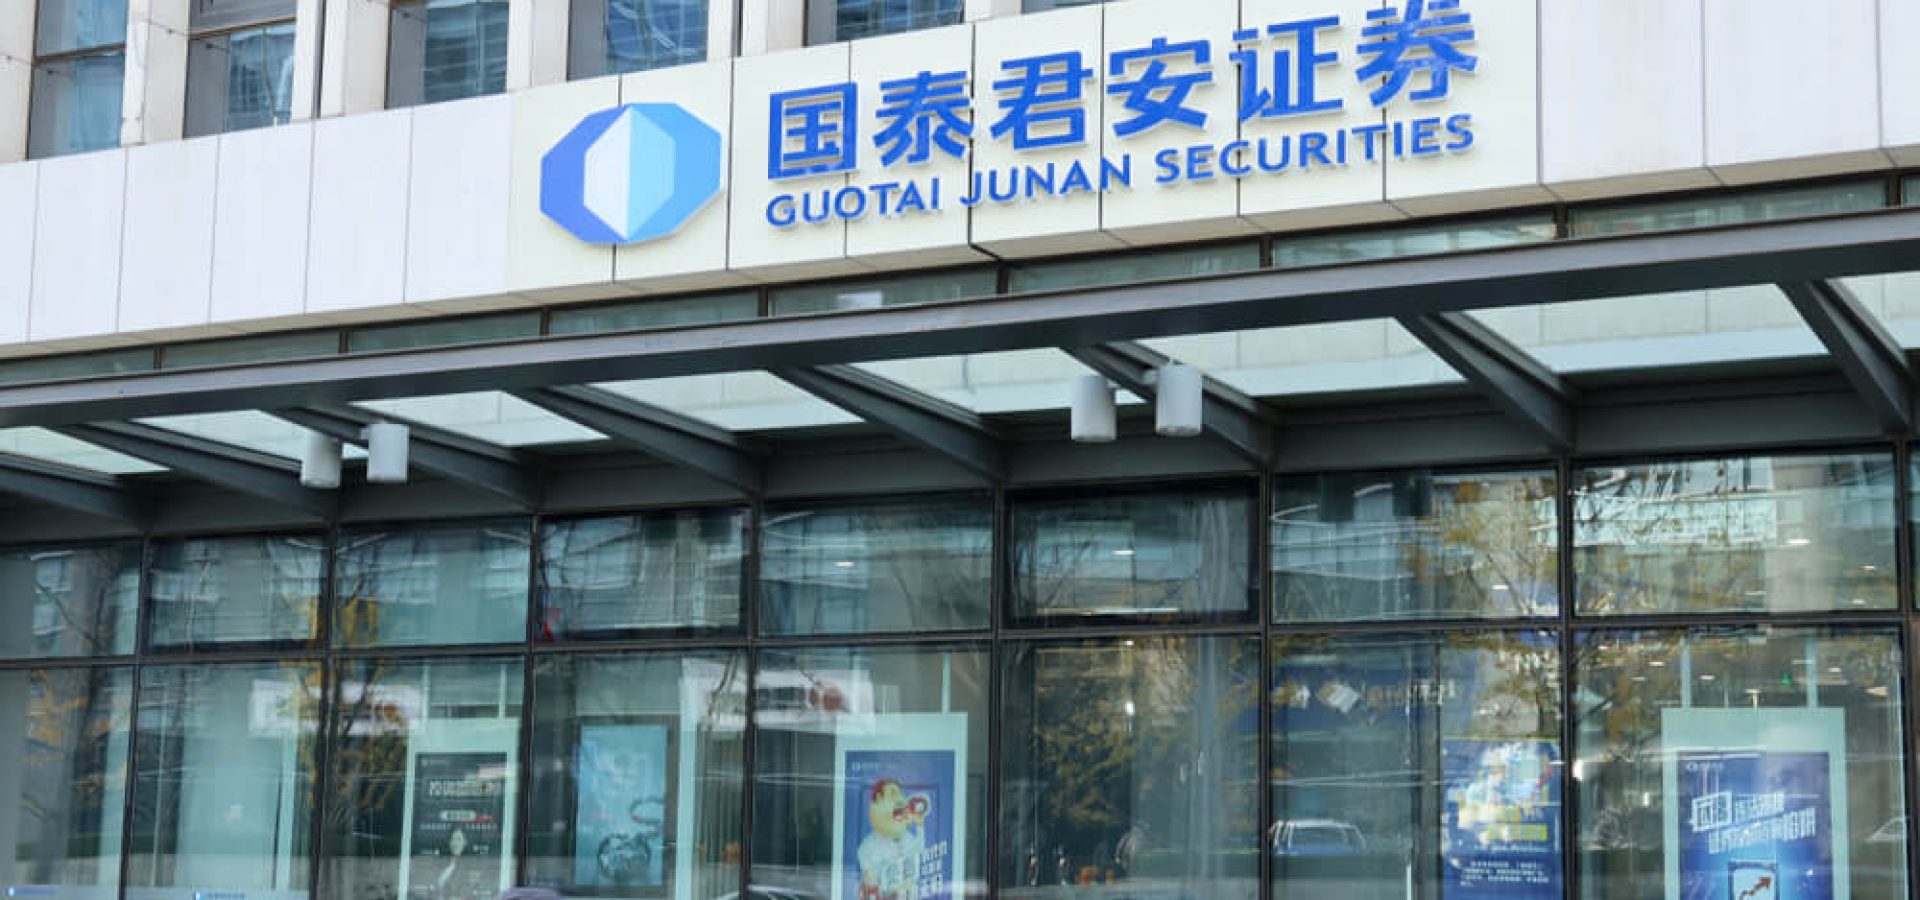 The branch of Guotai Junan Securities building.